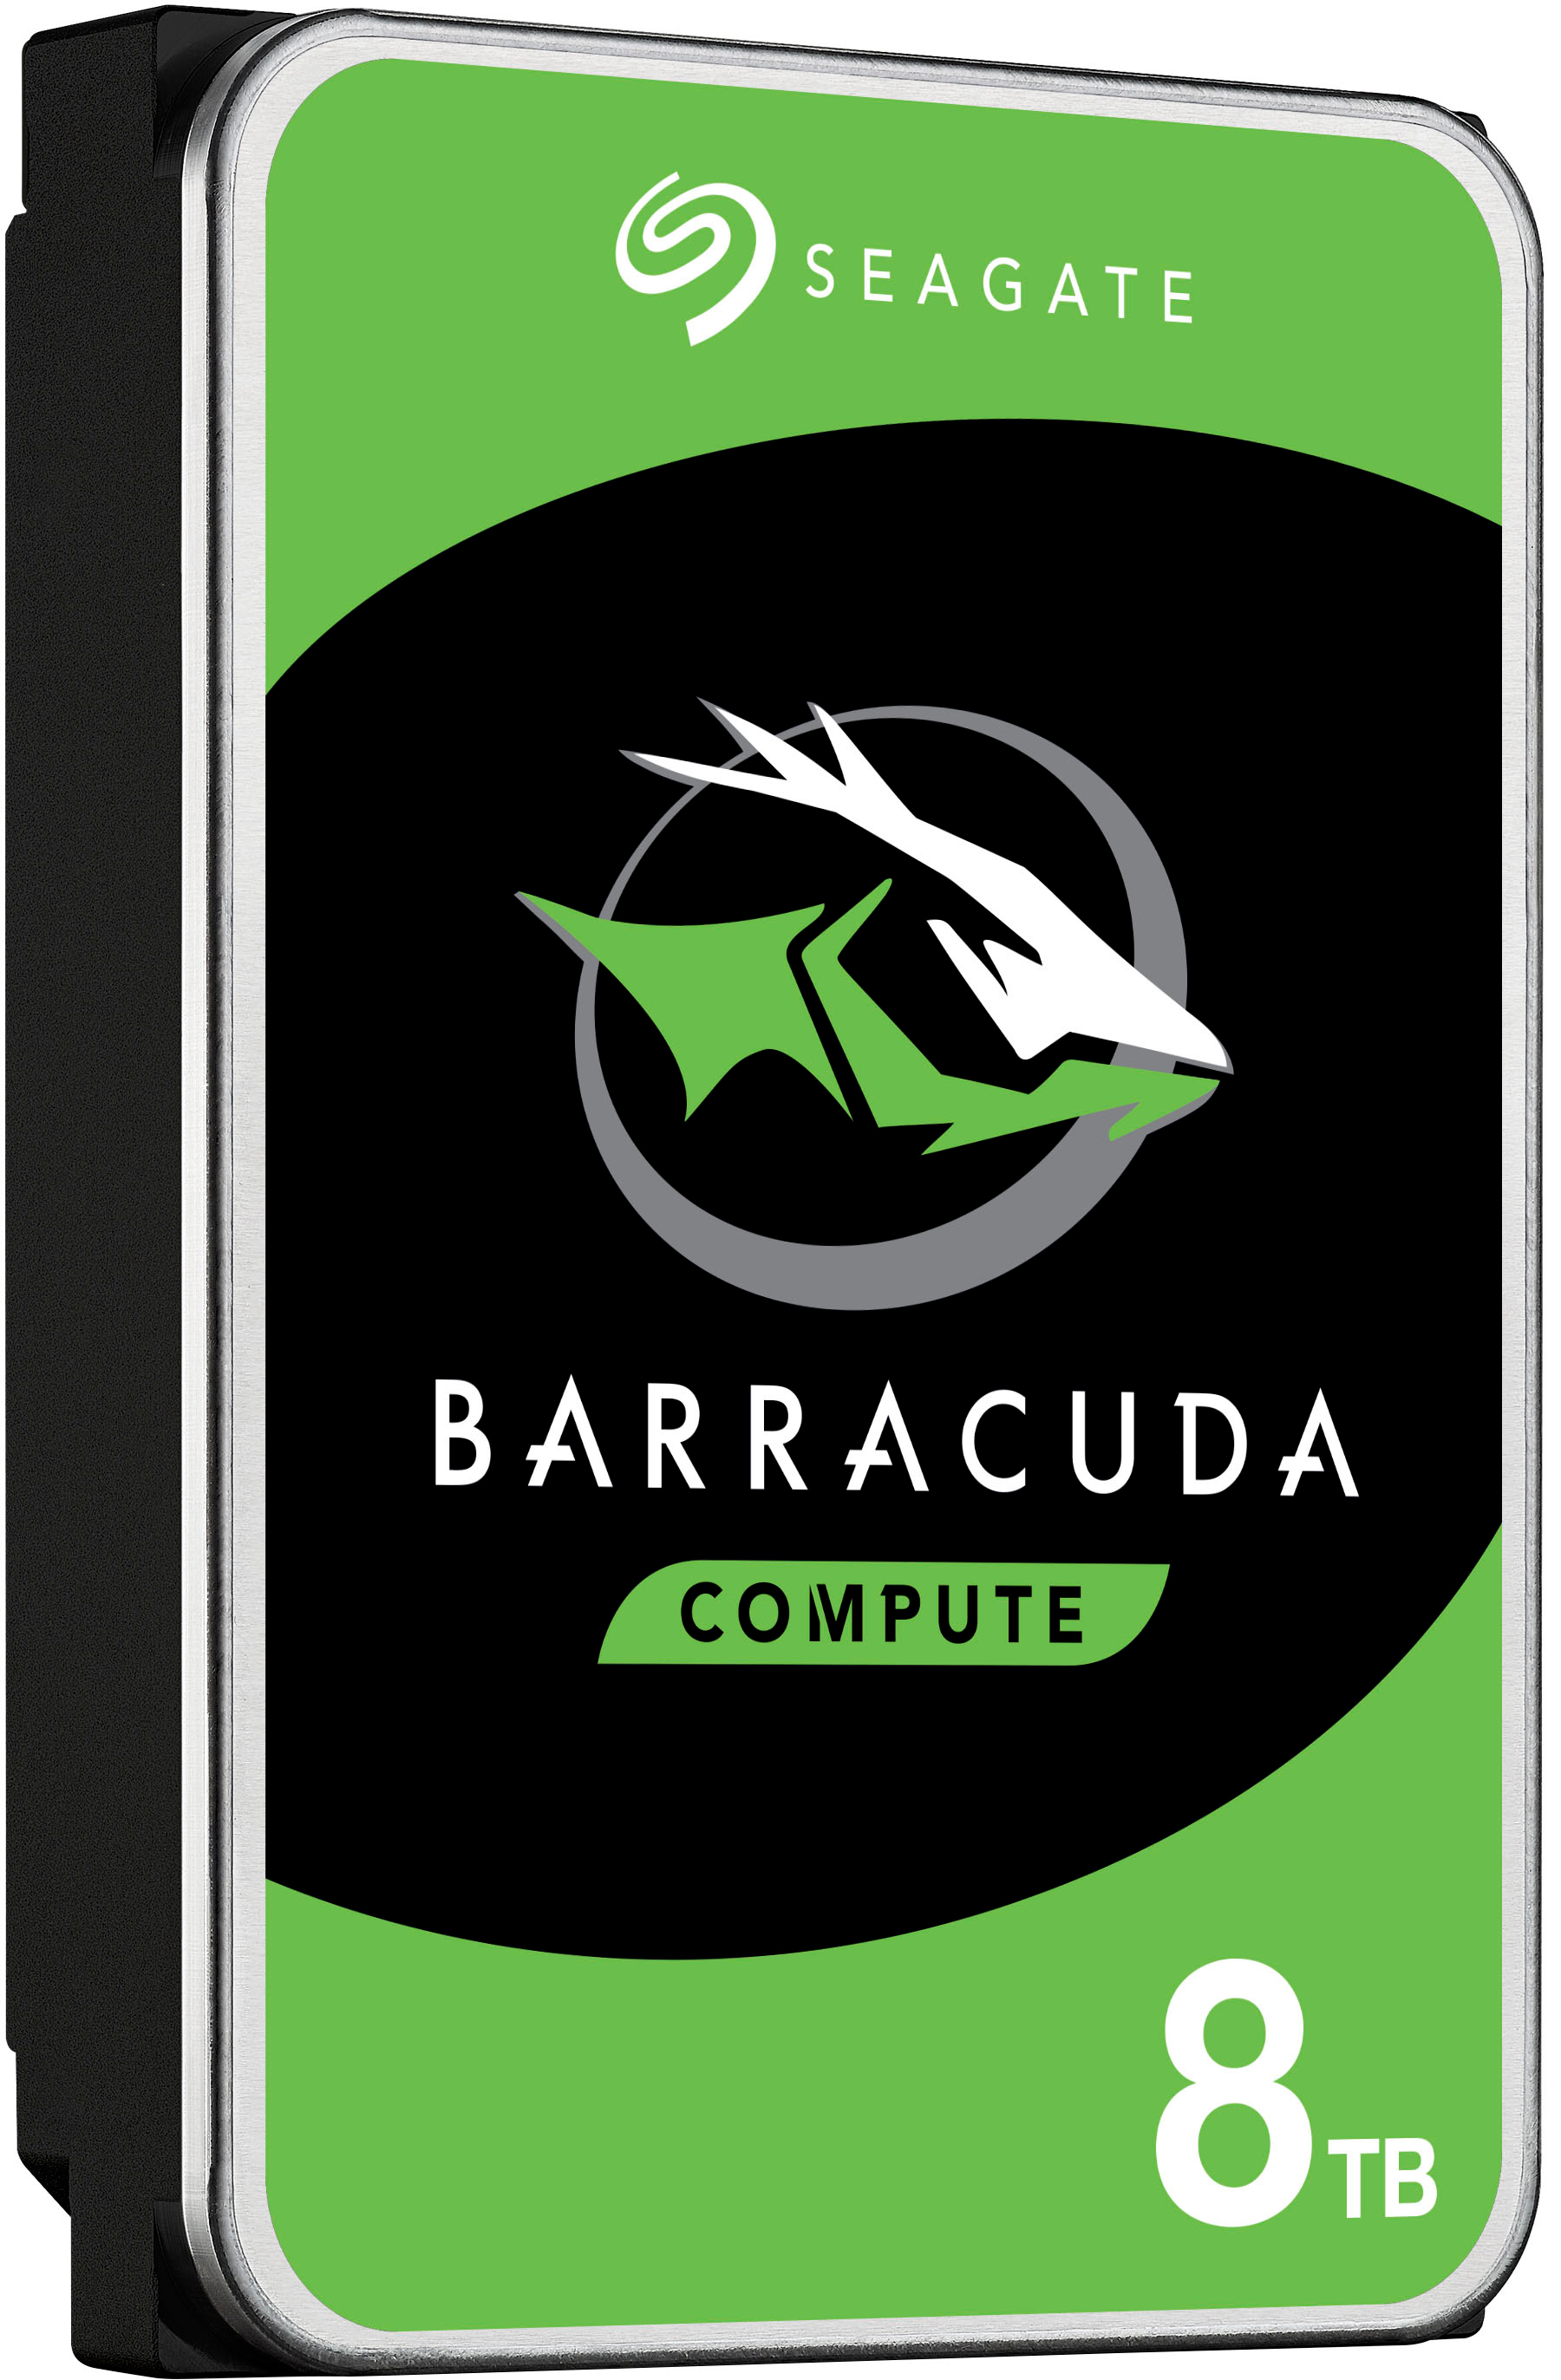 cable Separation reward Seagate BarraCuda 8TB Internal SATA Hard Drive for Desktops ST8000DMA04 -  Best Buy